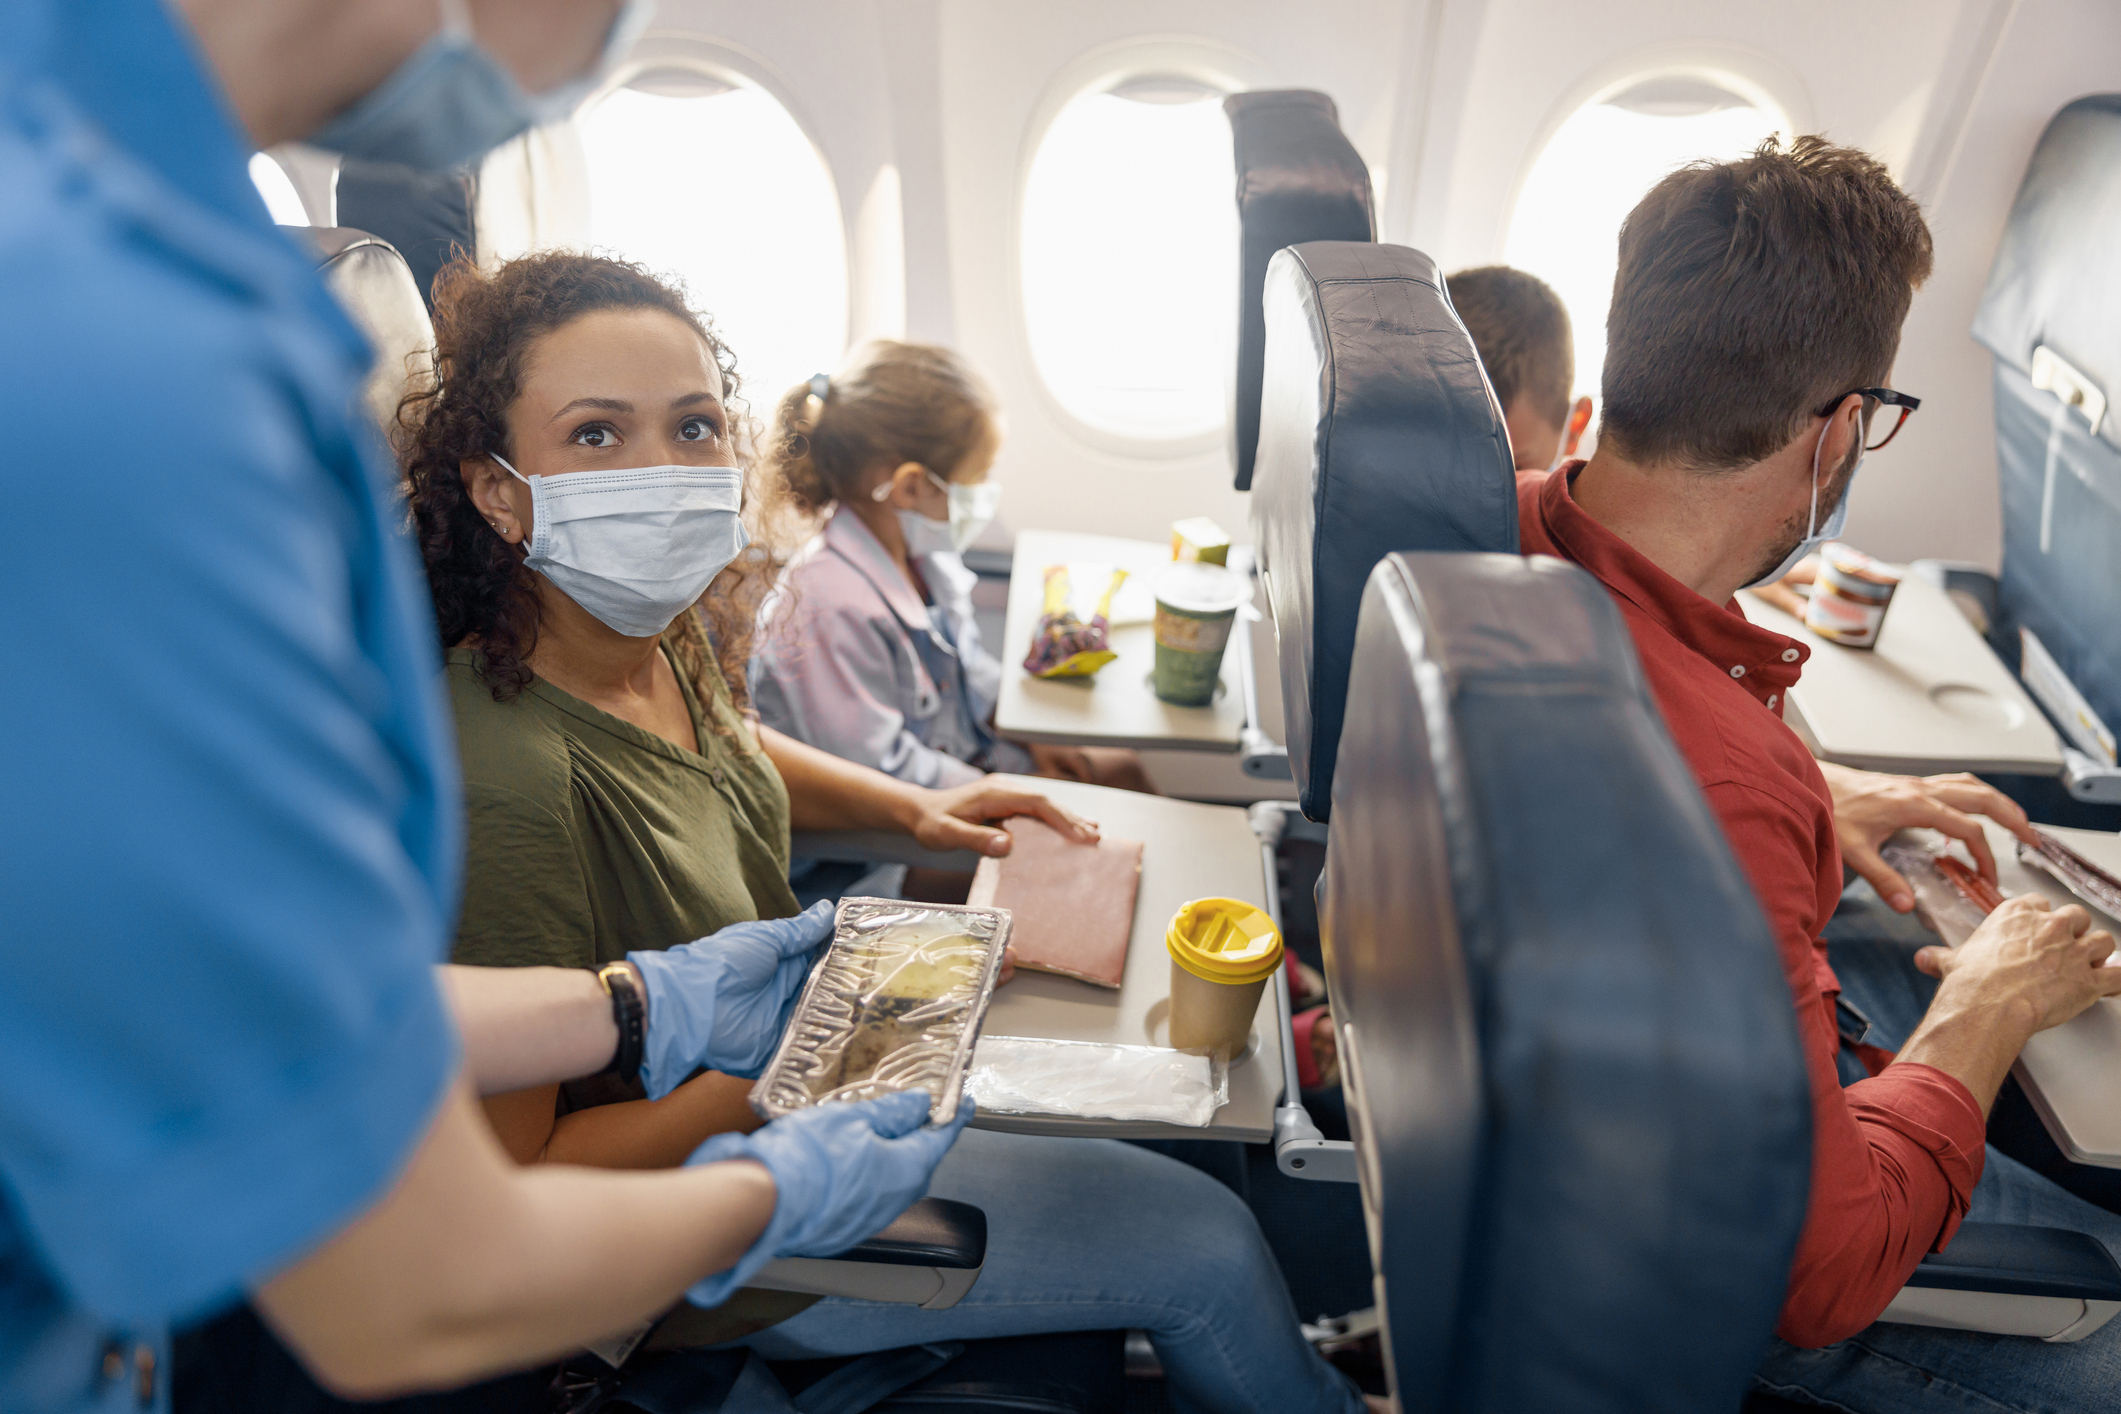 Passengers on an airplane, wearing masks